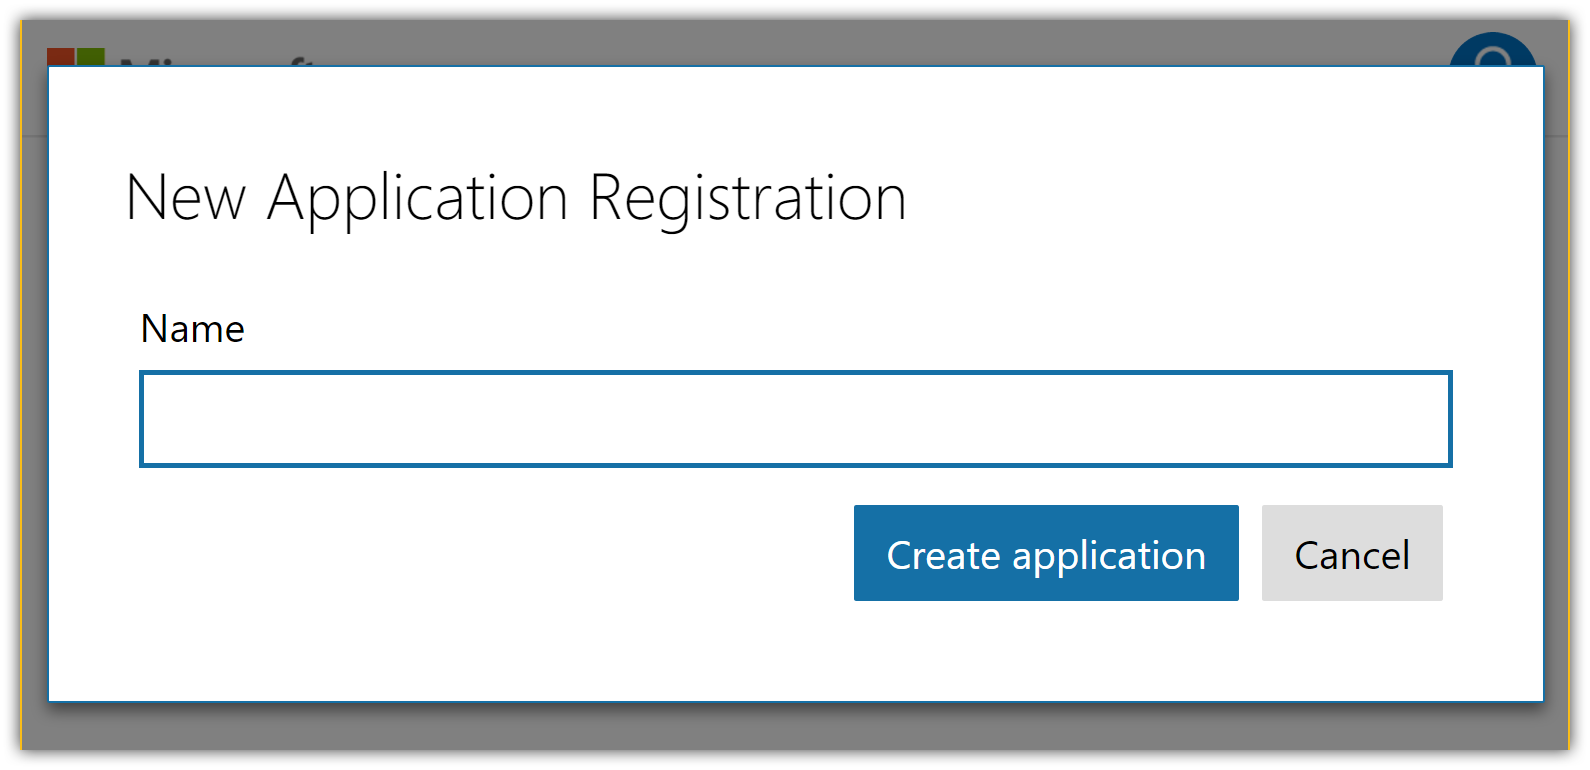 New Application Registration dialog